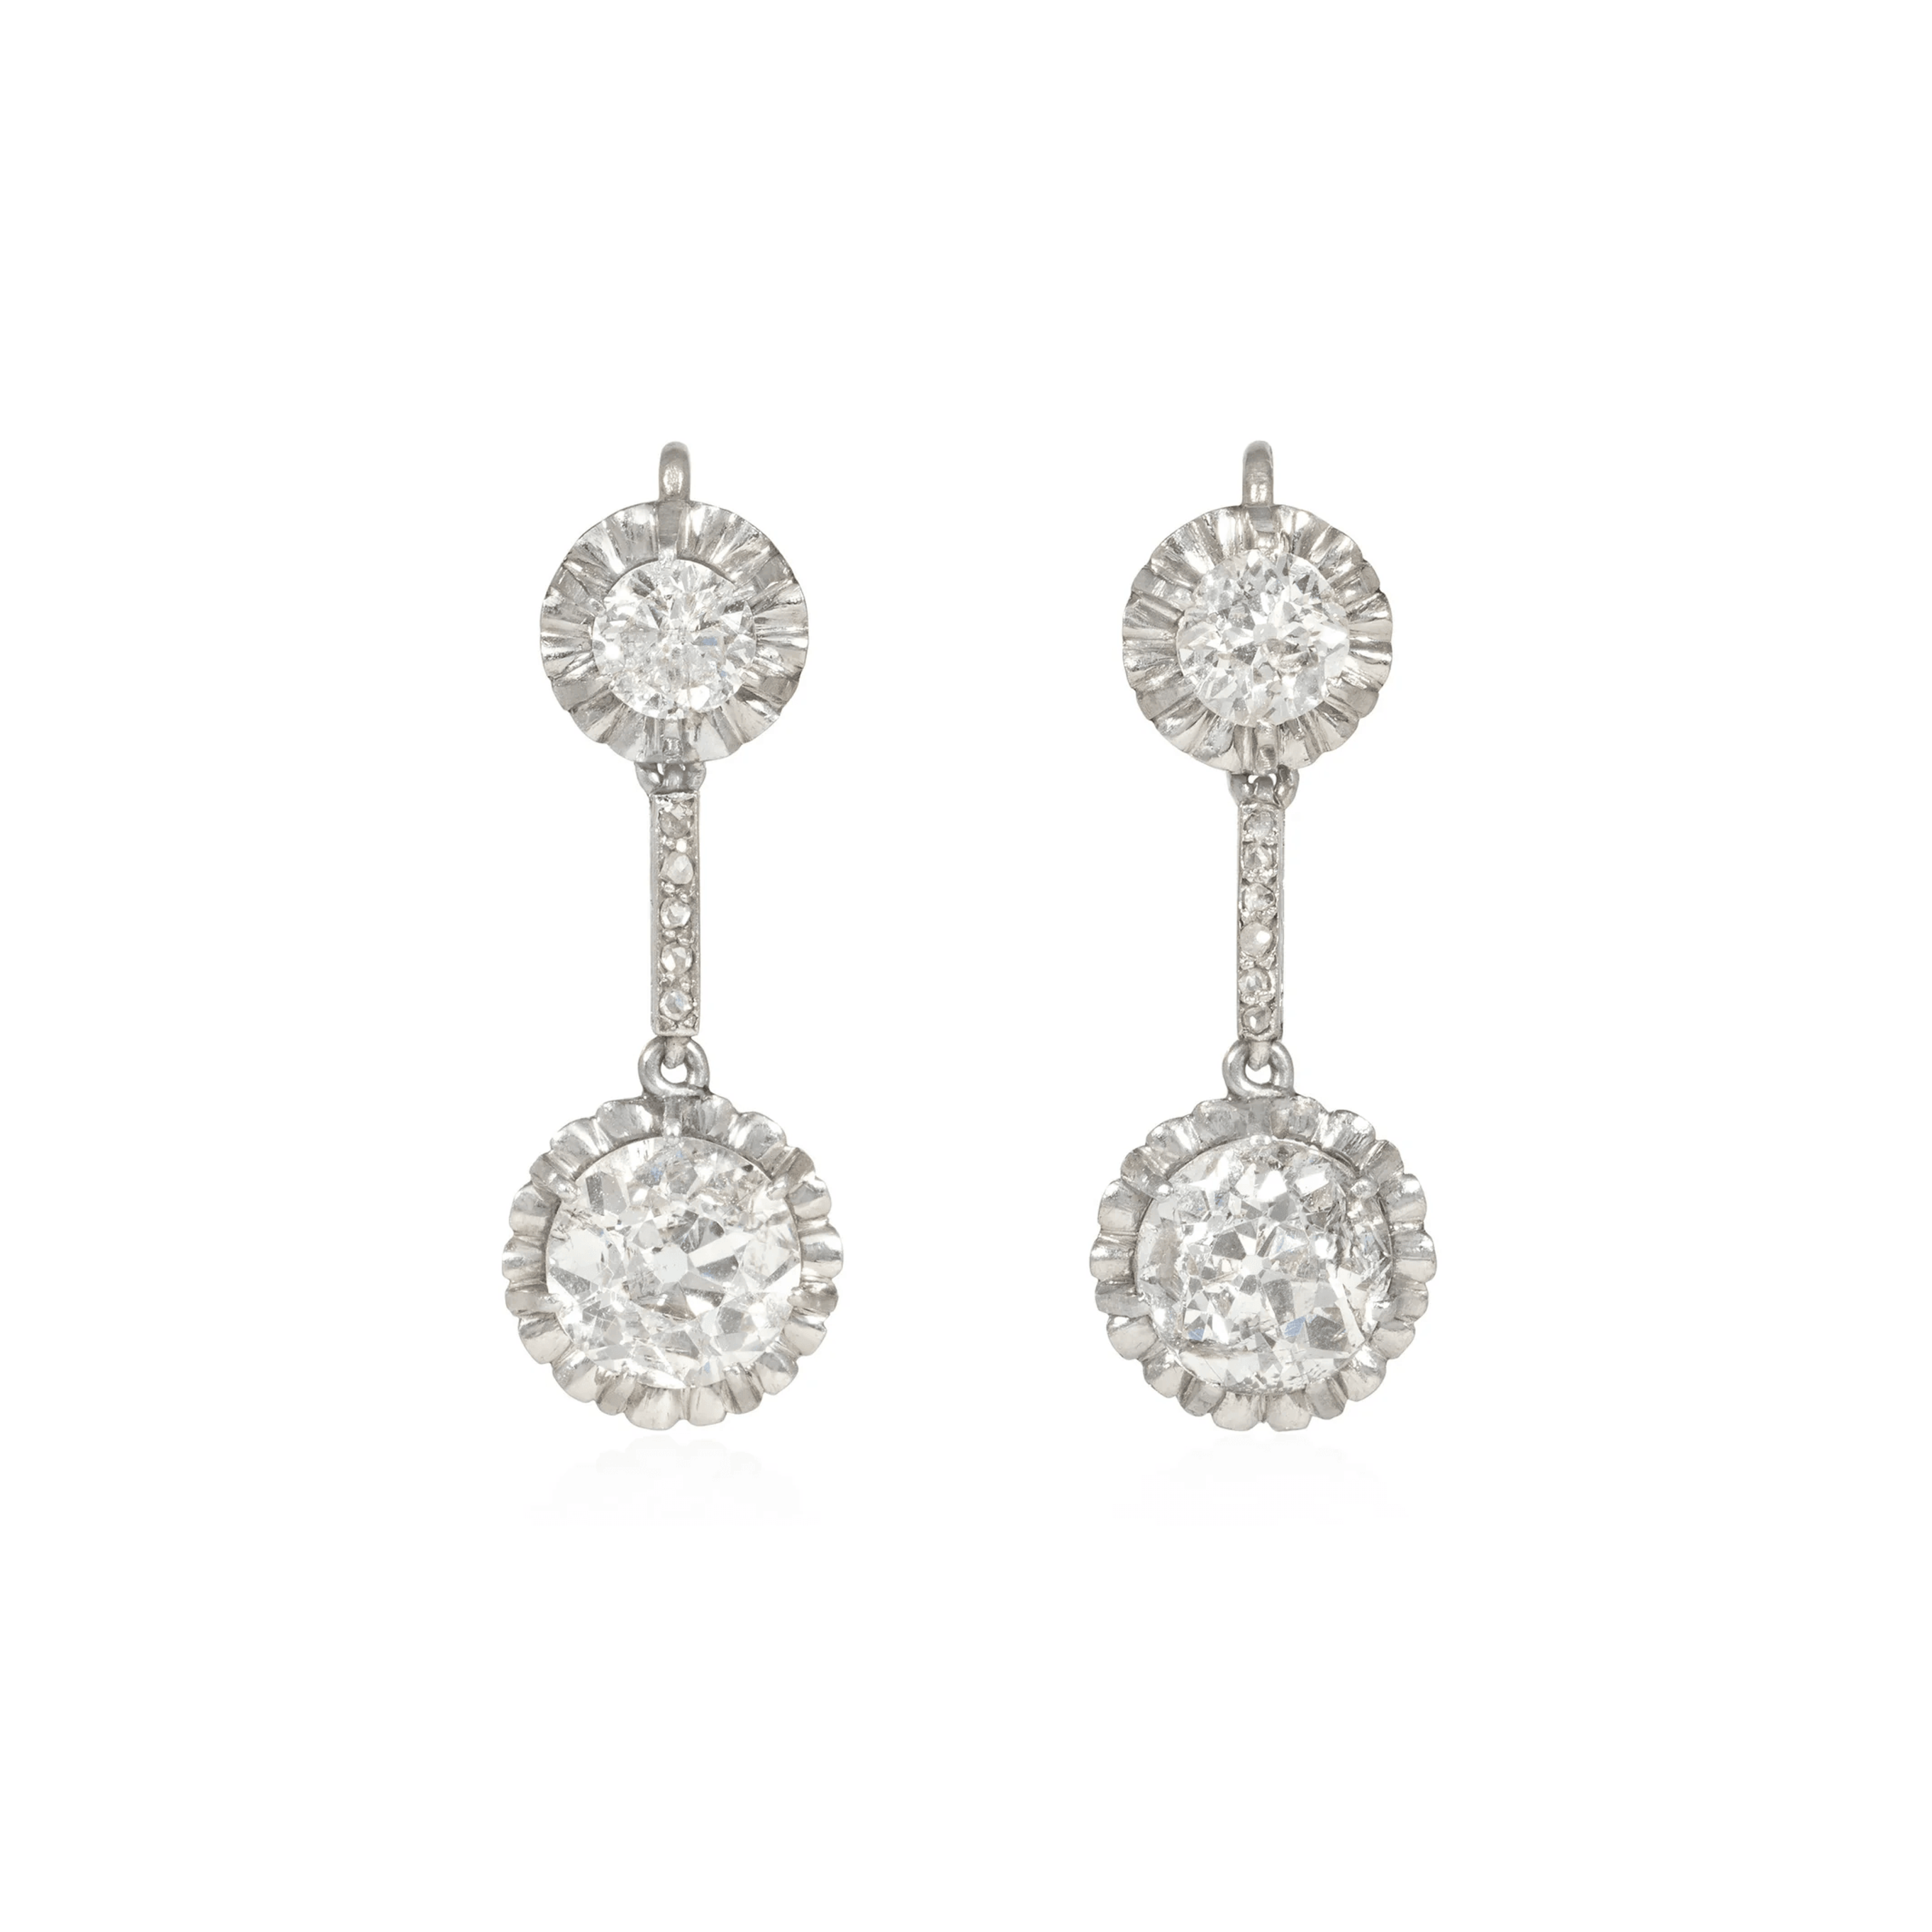 Solitaire earrings with 3.00 carat diamonds in platinum - BAUNAT